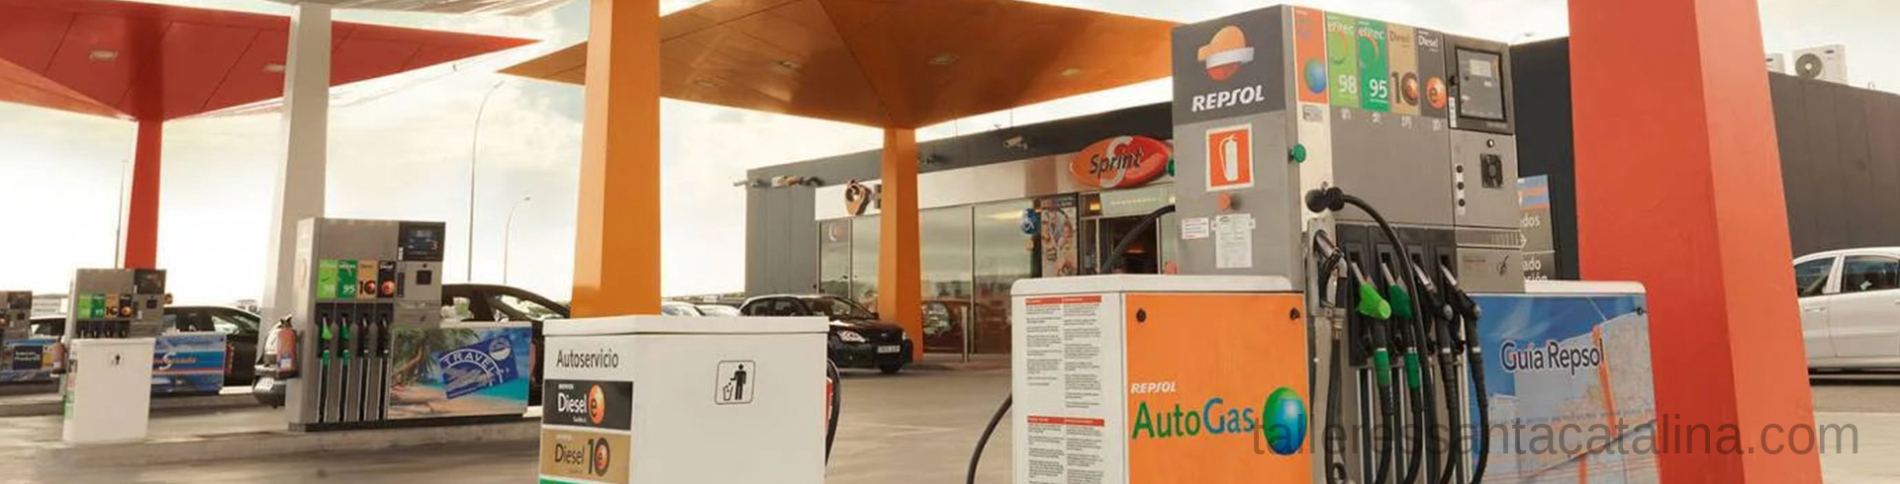 autogas_repsol_gasolineras